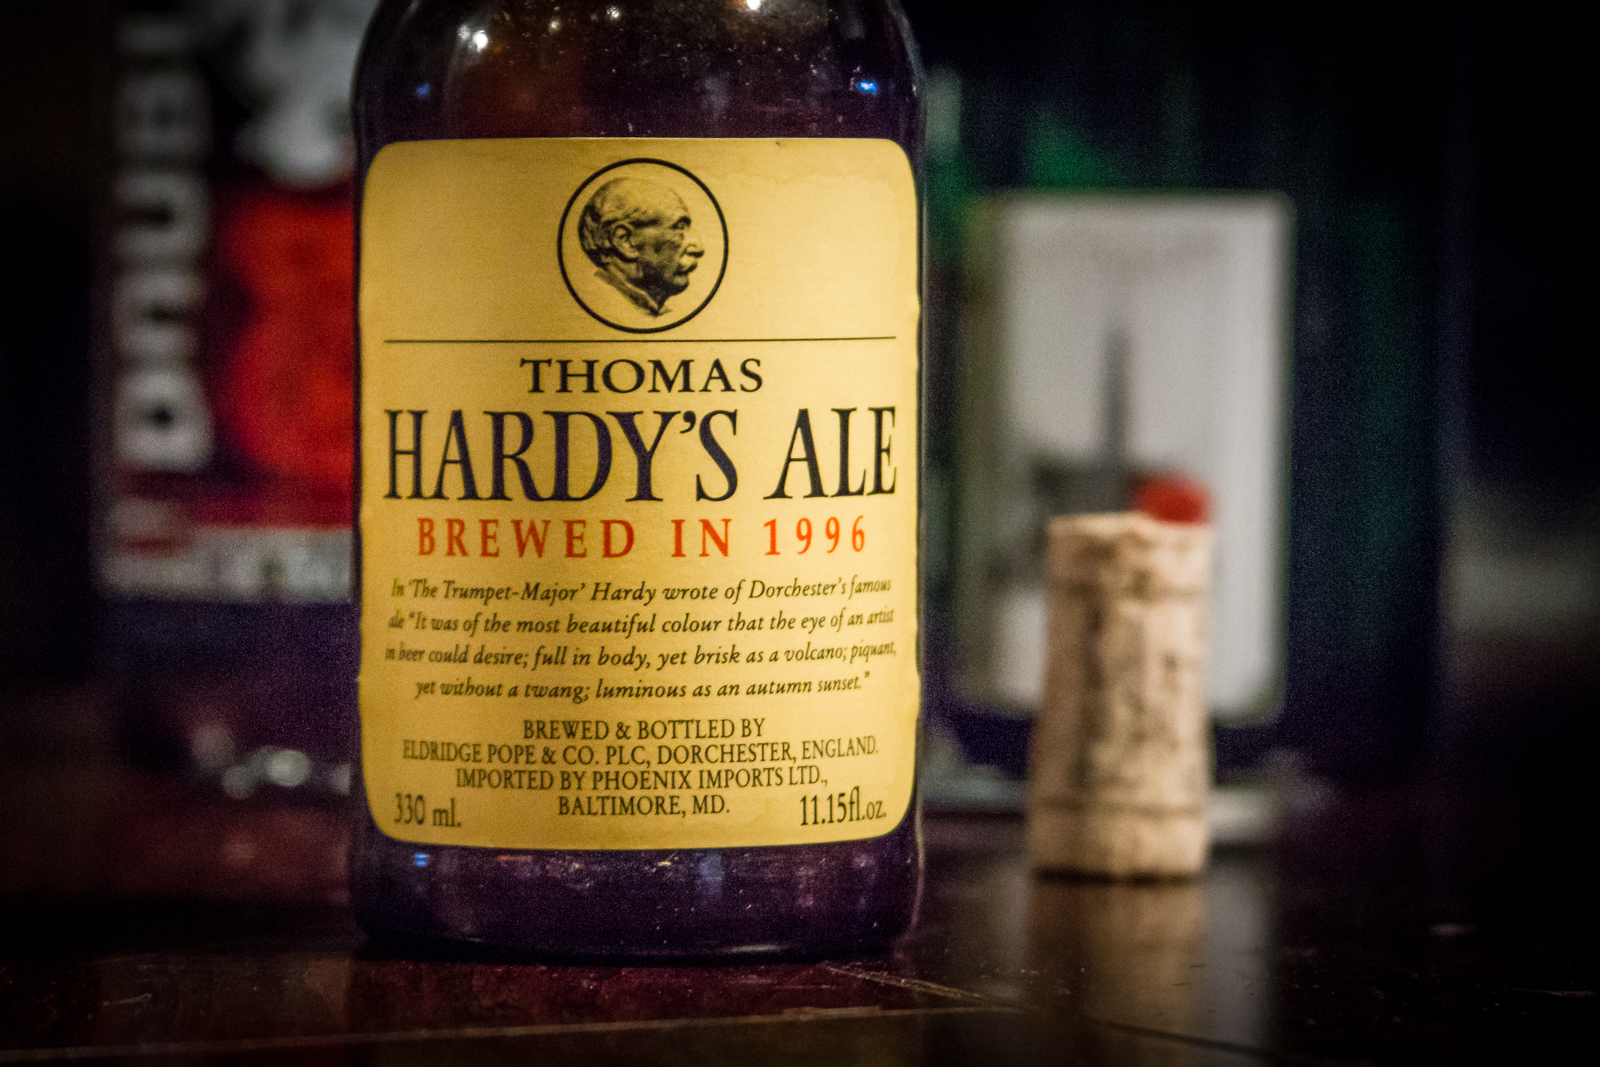 Thomas Hardy's Ale, Vintage 1996